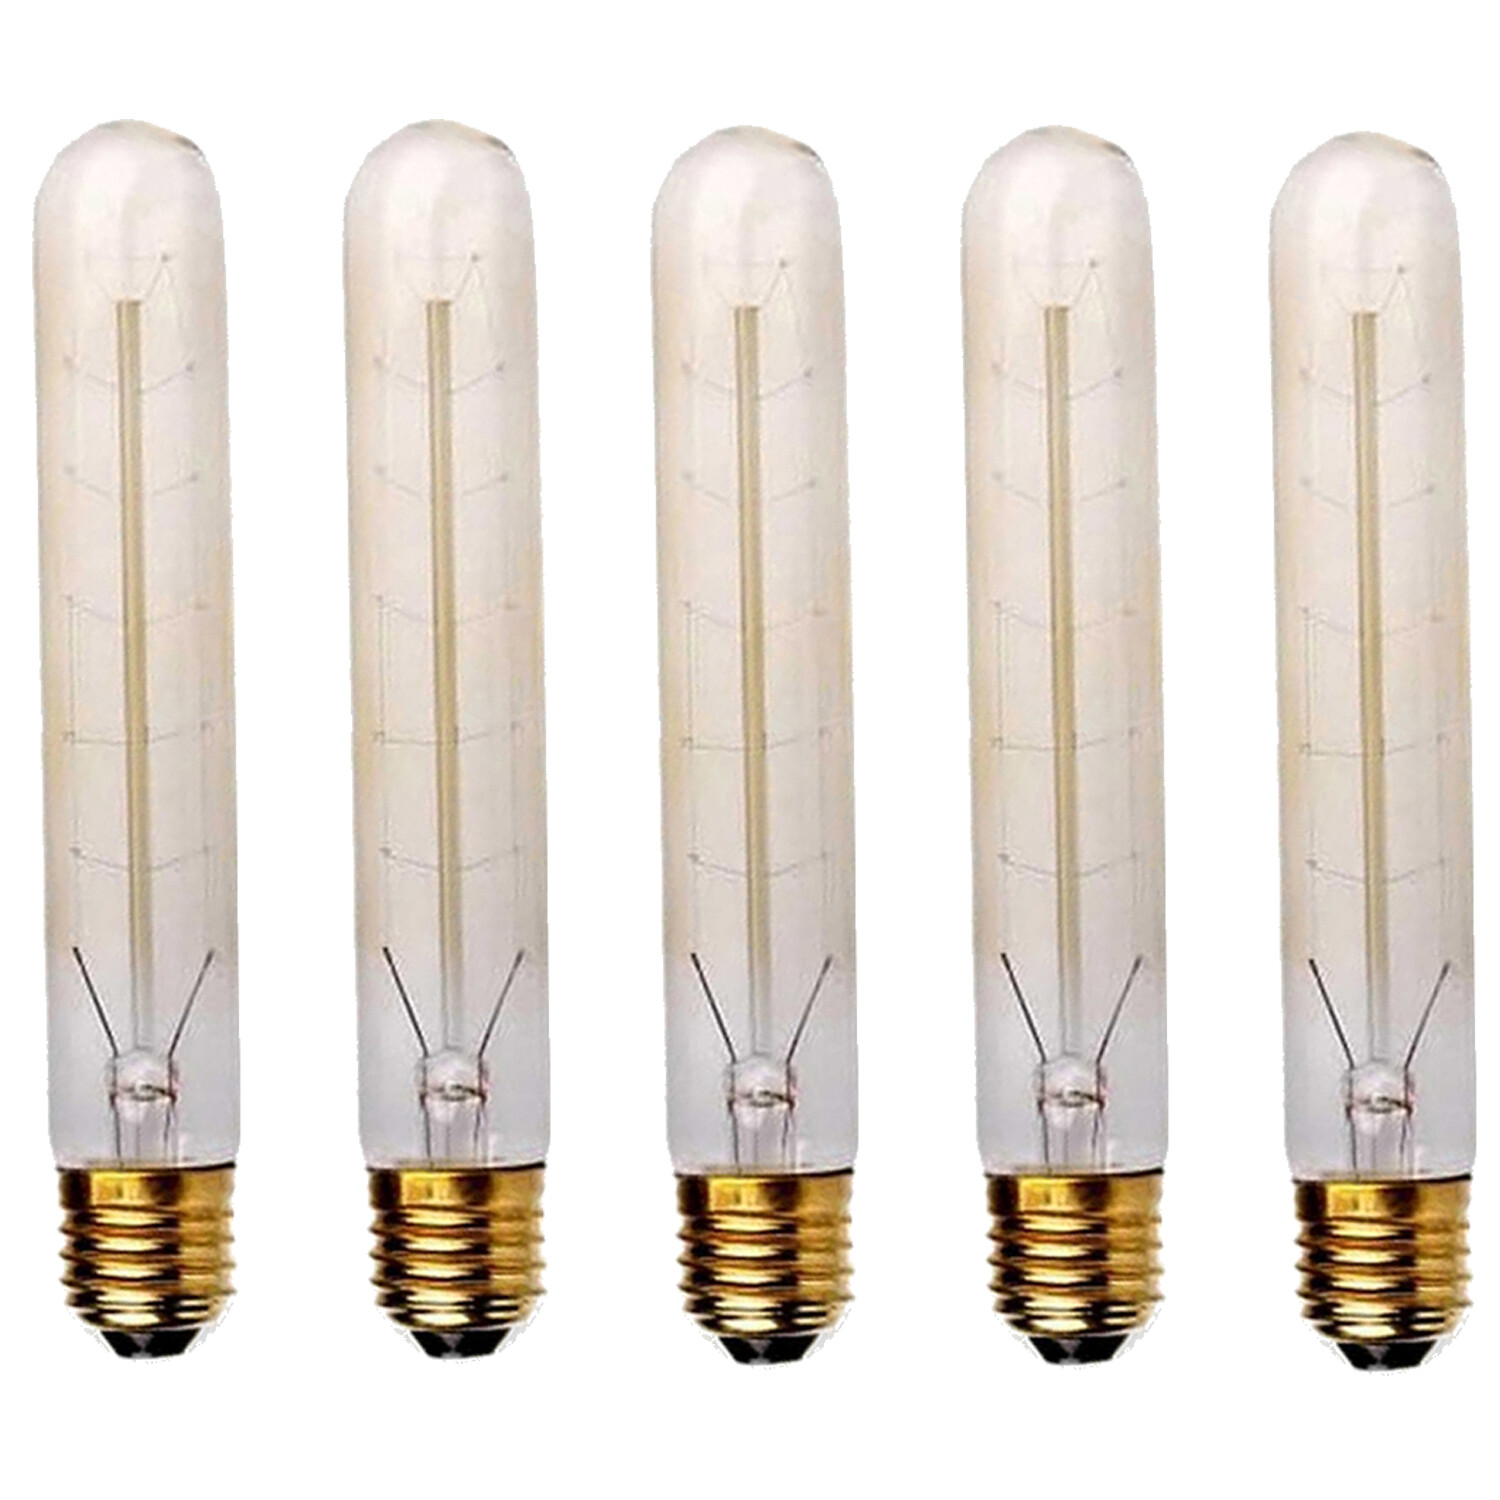 E26 T185 60W Vintage Retro Industrial Filament Bulb Pack 5